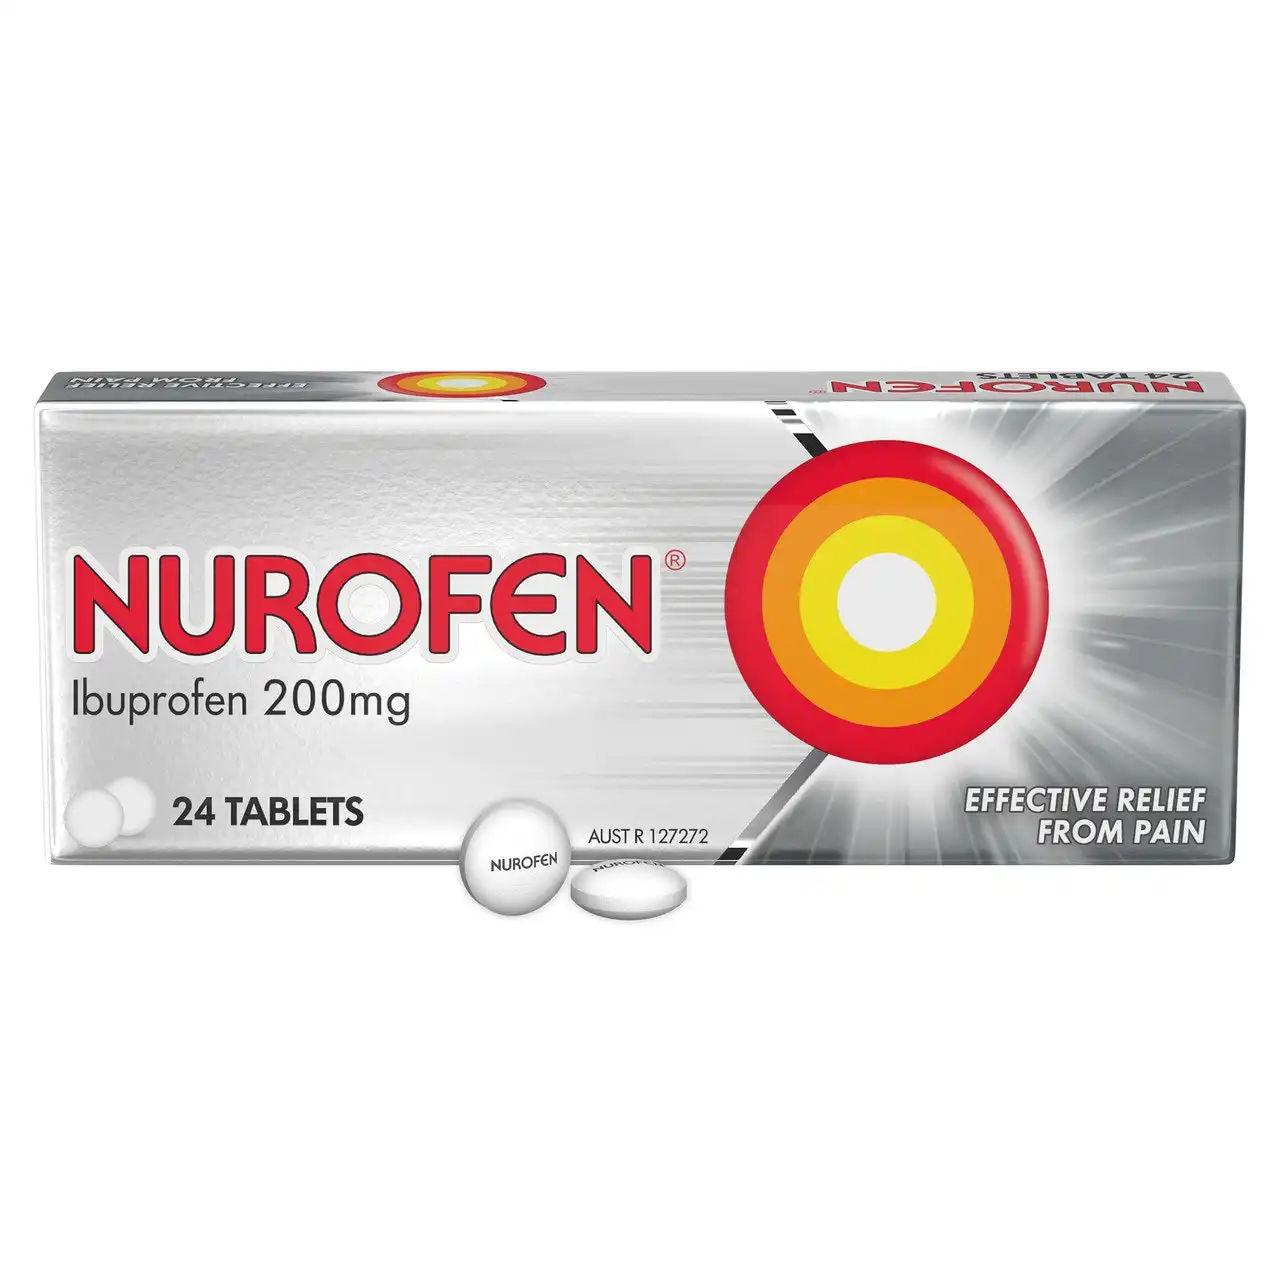 Nurofen Tablets 24s 200mg Ibuprofen anti-inflammatory pain relief